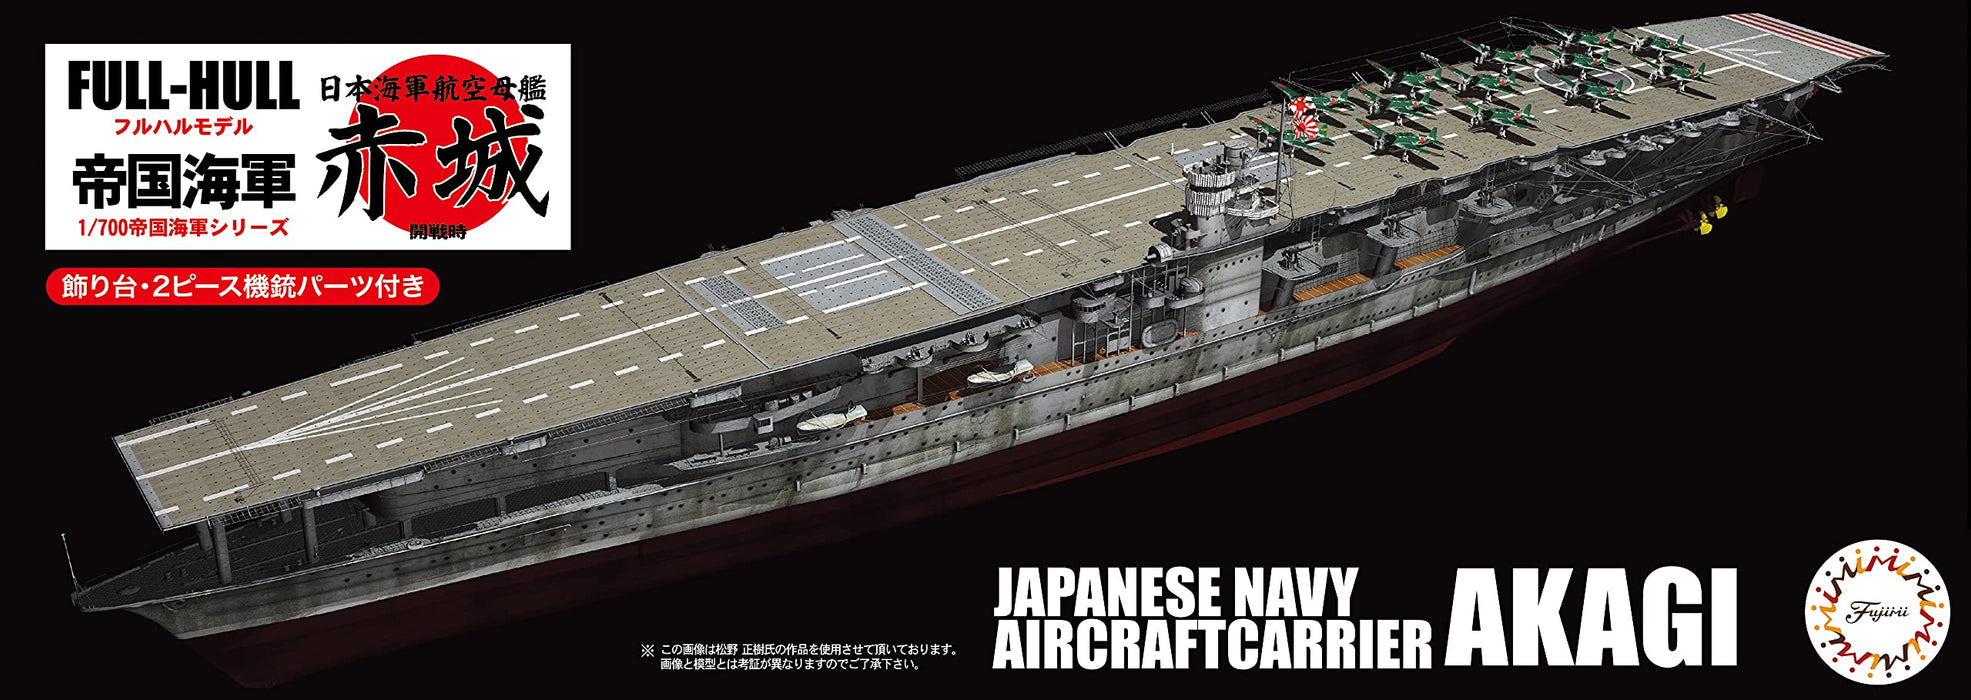 Fujimi Model 1/700 Imperial Navy Series No.14 Japanese Navy Aircraft Carrier Akagi Full Hull Model Fh-14